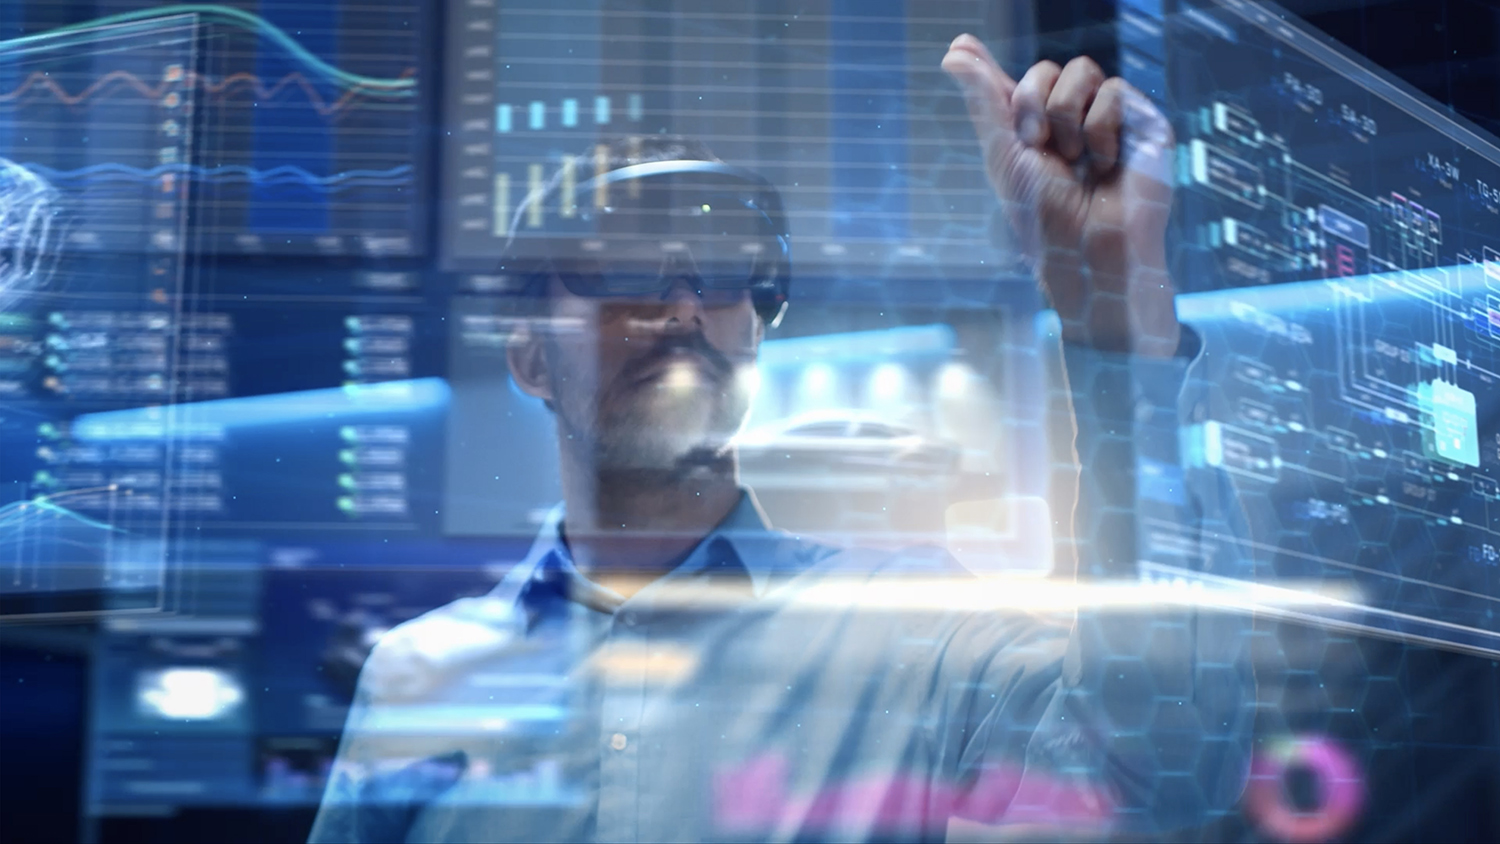 Man with virtual reality headset uses his left hand to virtually grasp an image.